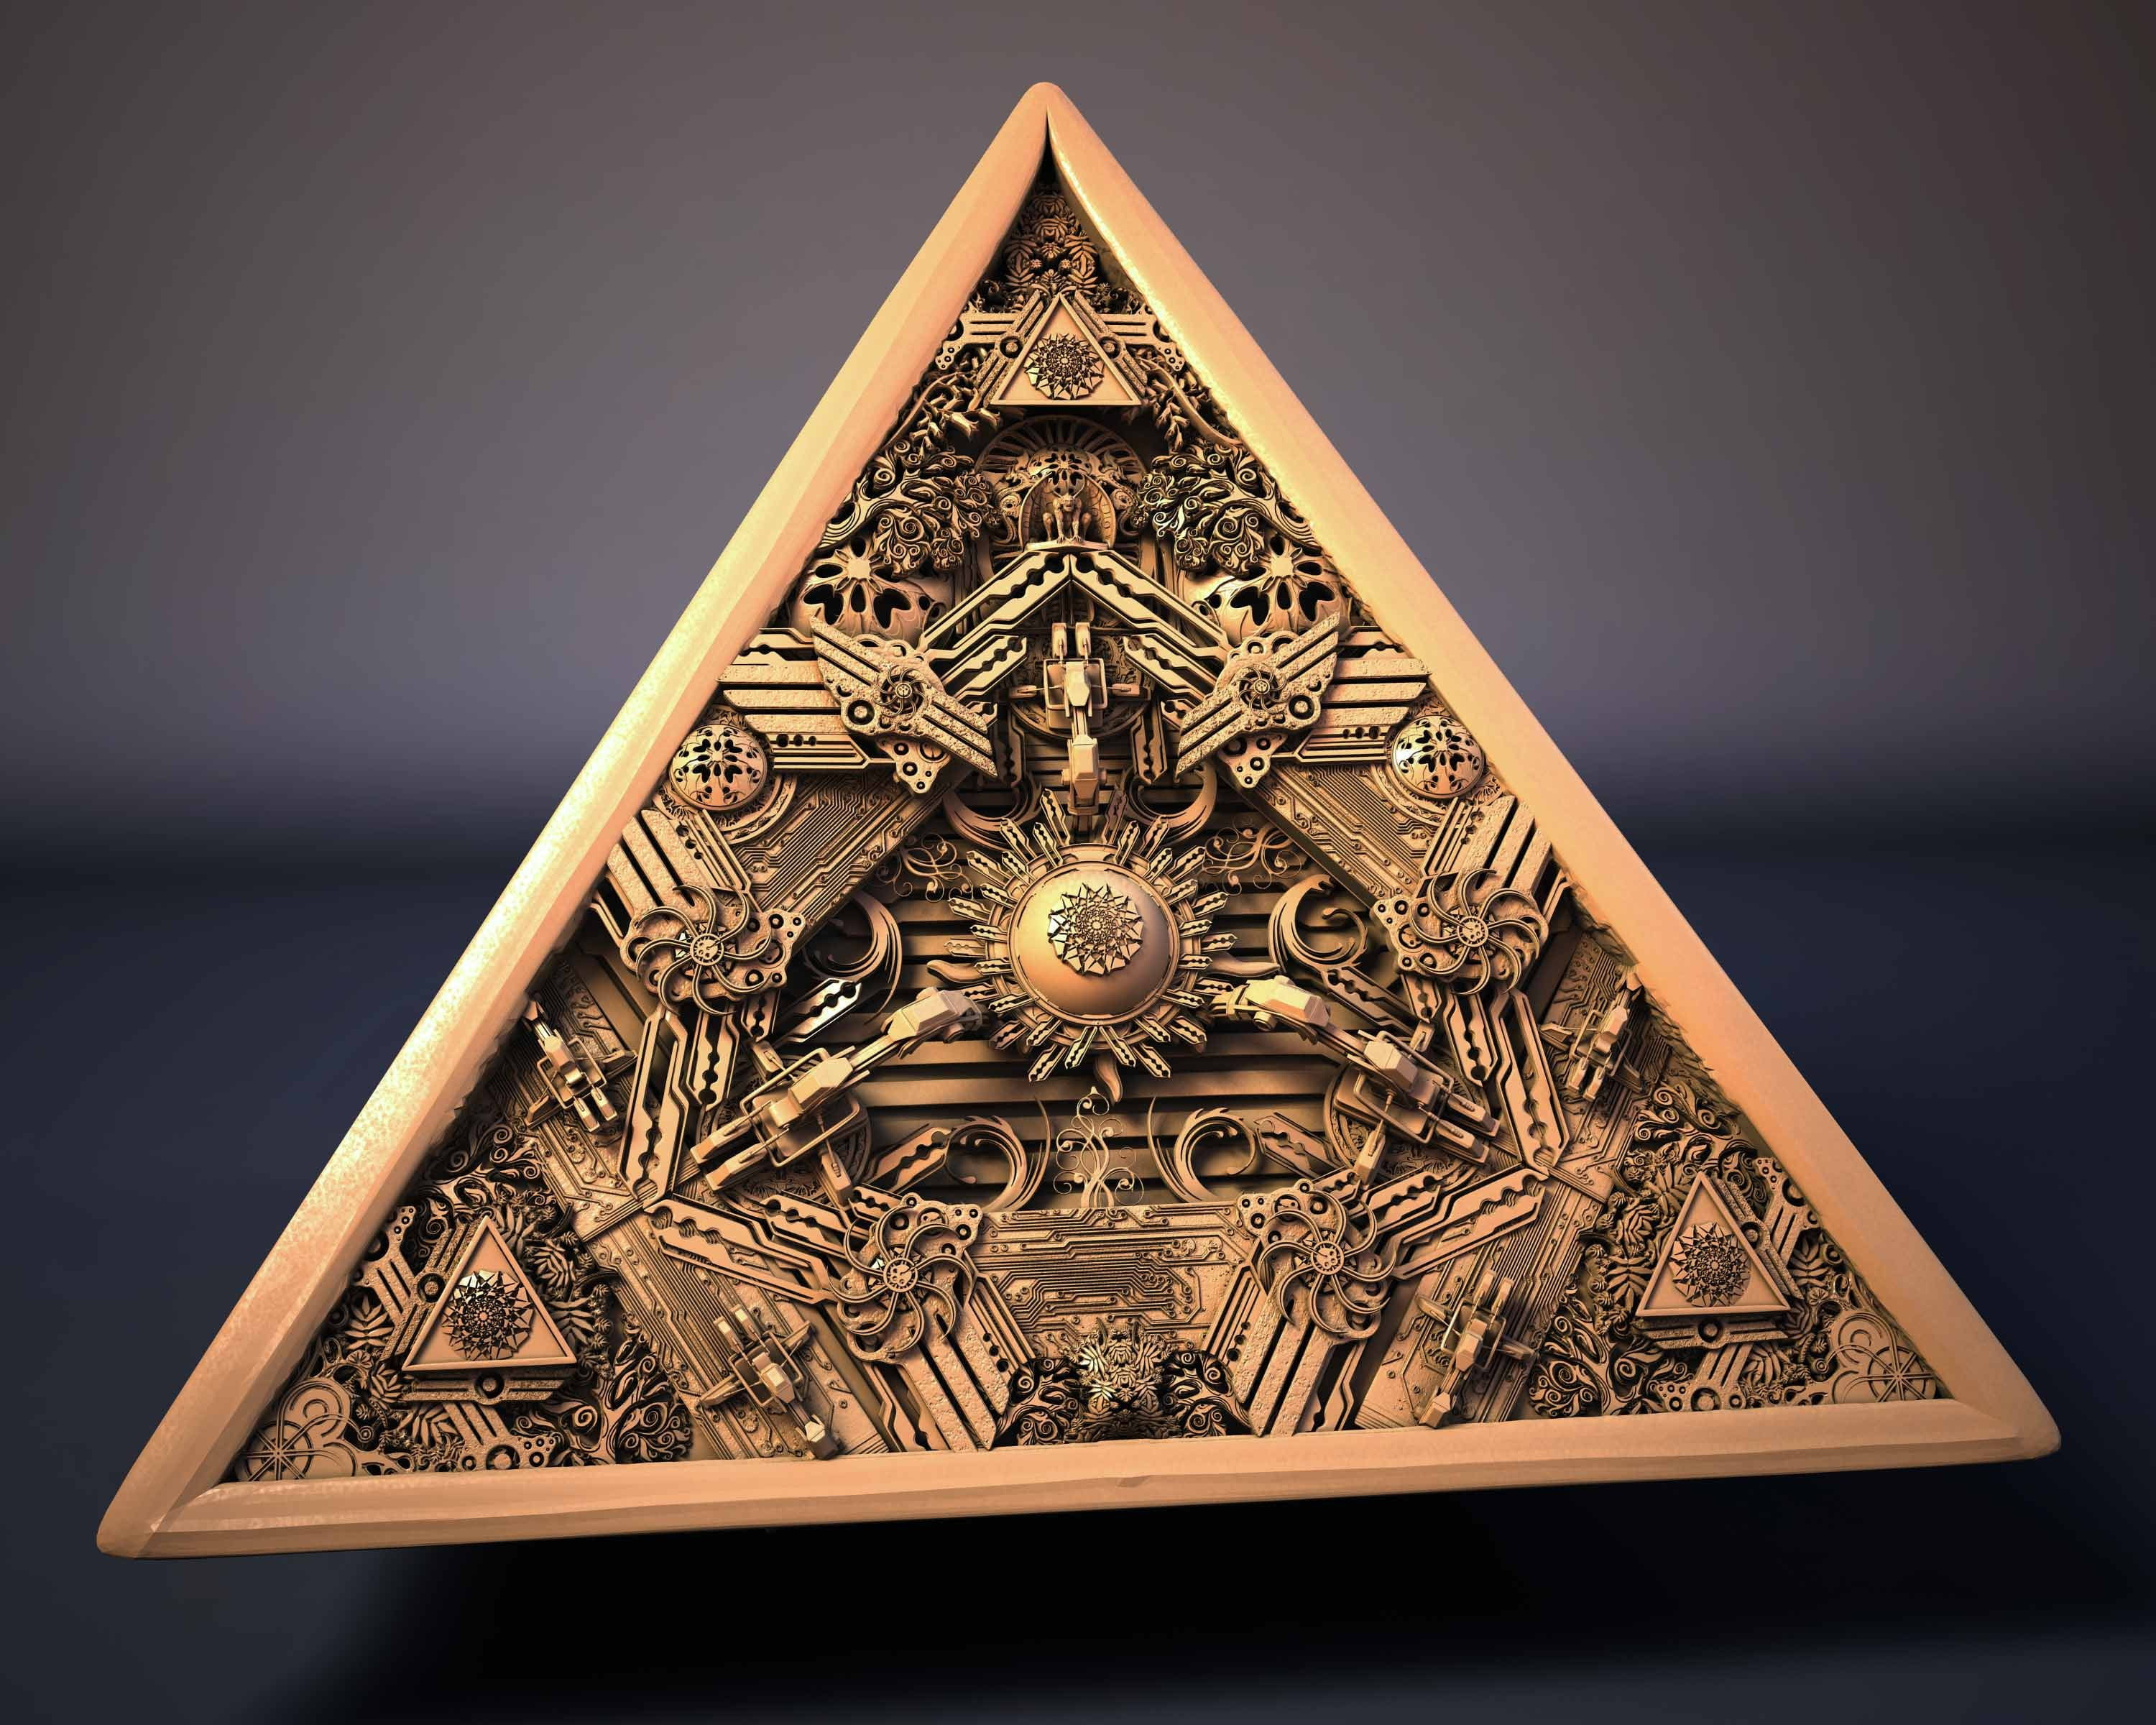 triangular gold-colored emblem, digital art, triangle